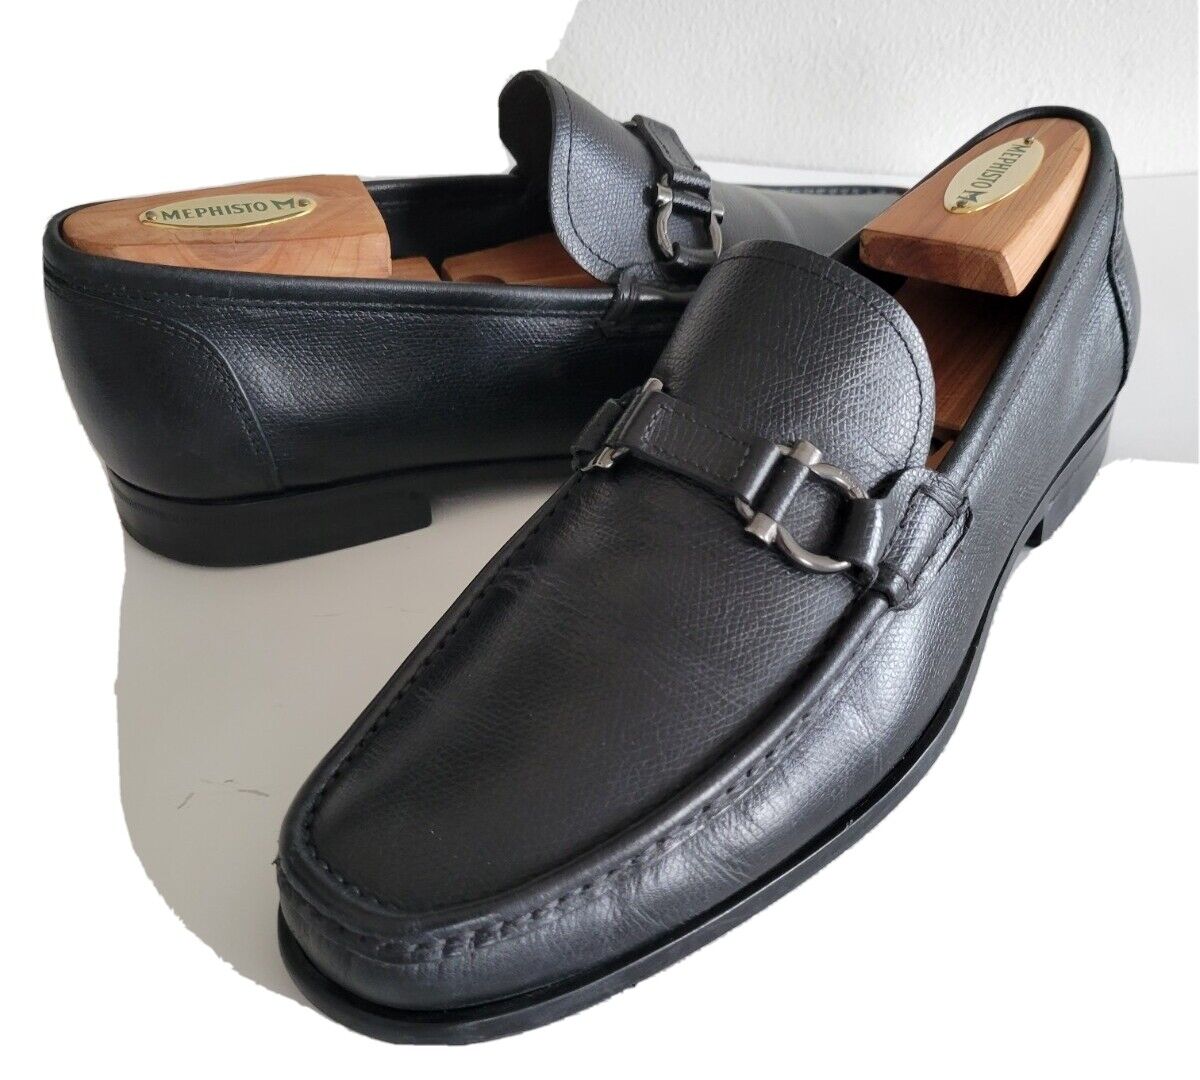 Salvatore Ferragamo Gancinni Bit Suit Blazer Black Loafer Shoes Men 8EEE 3E 41